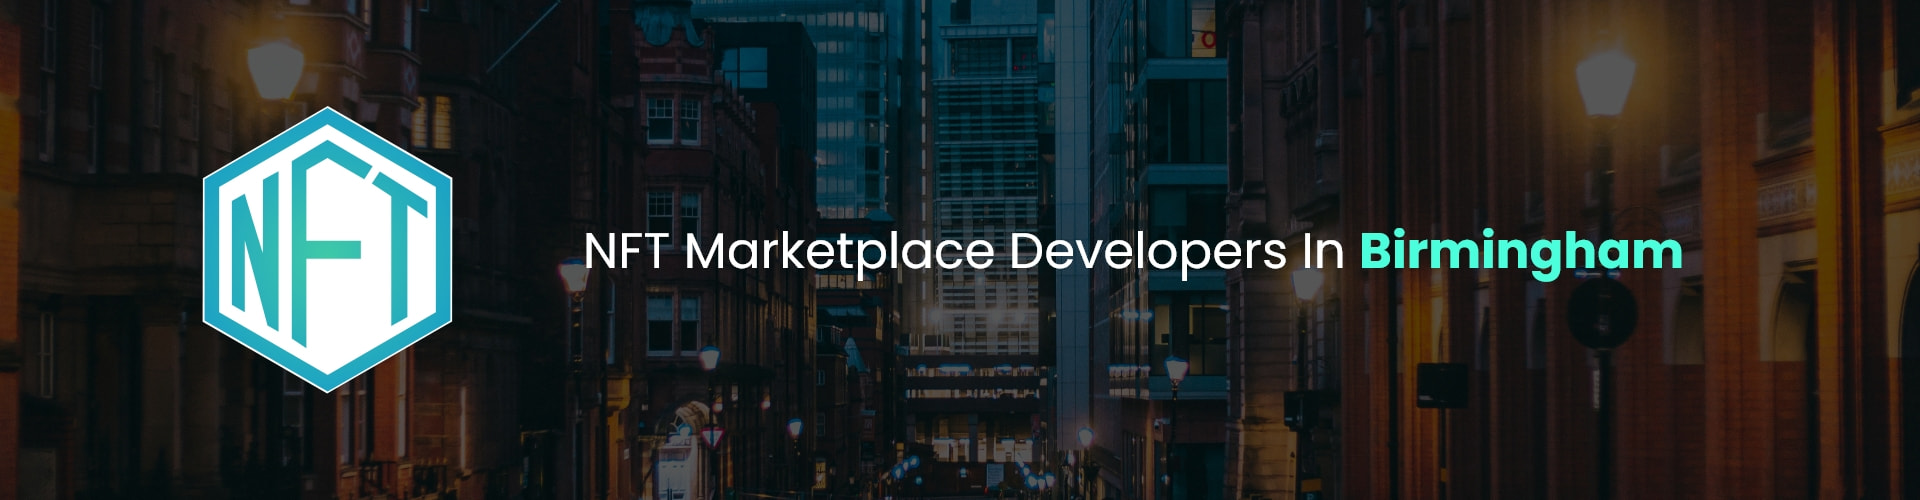 hire nft marketplace developers in birmingham